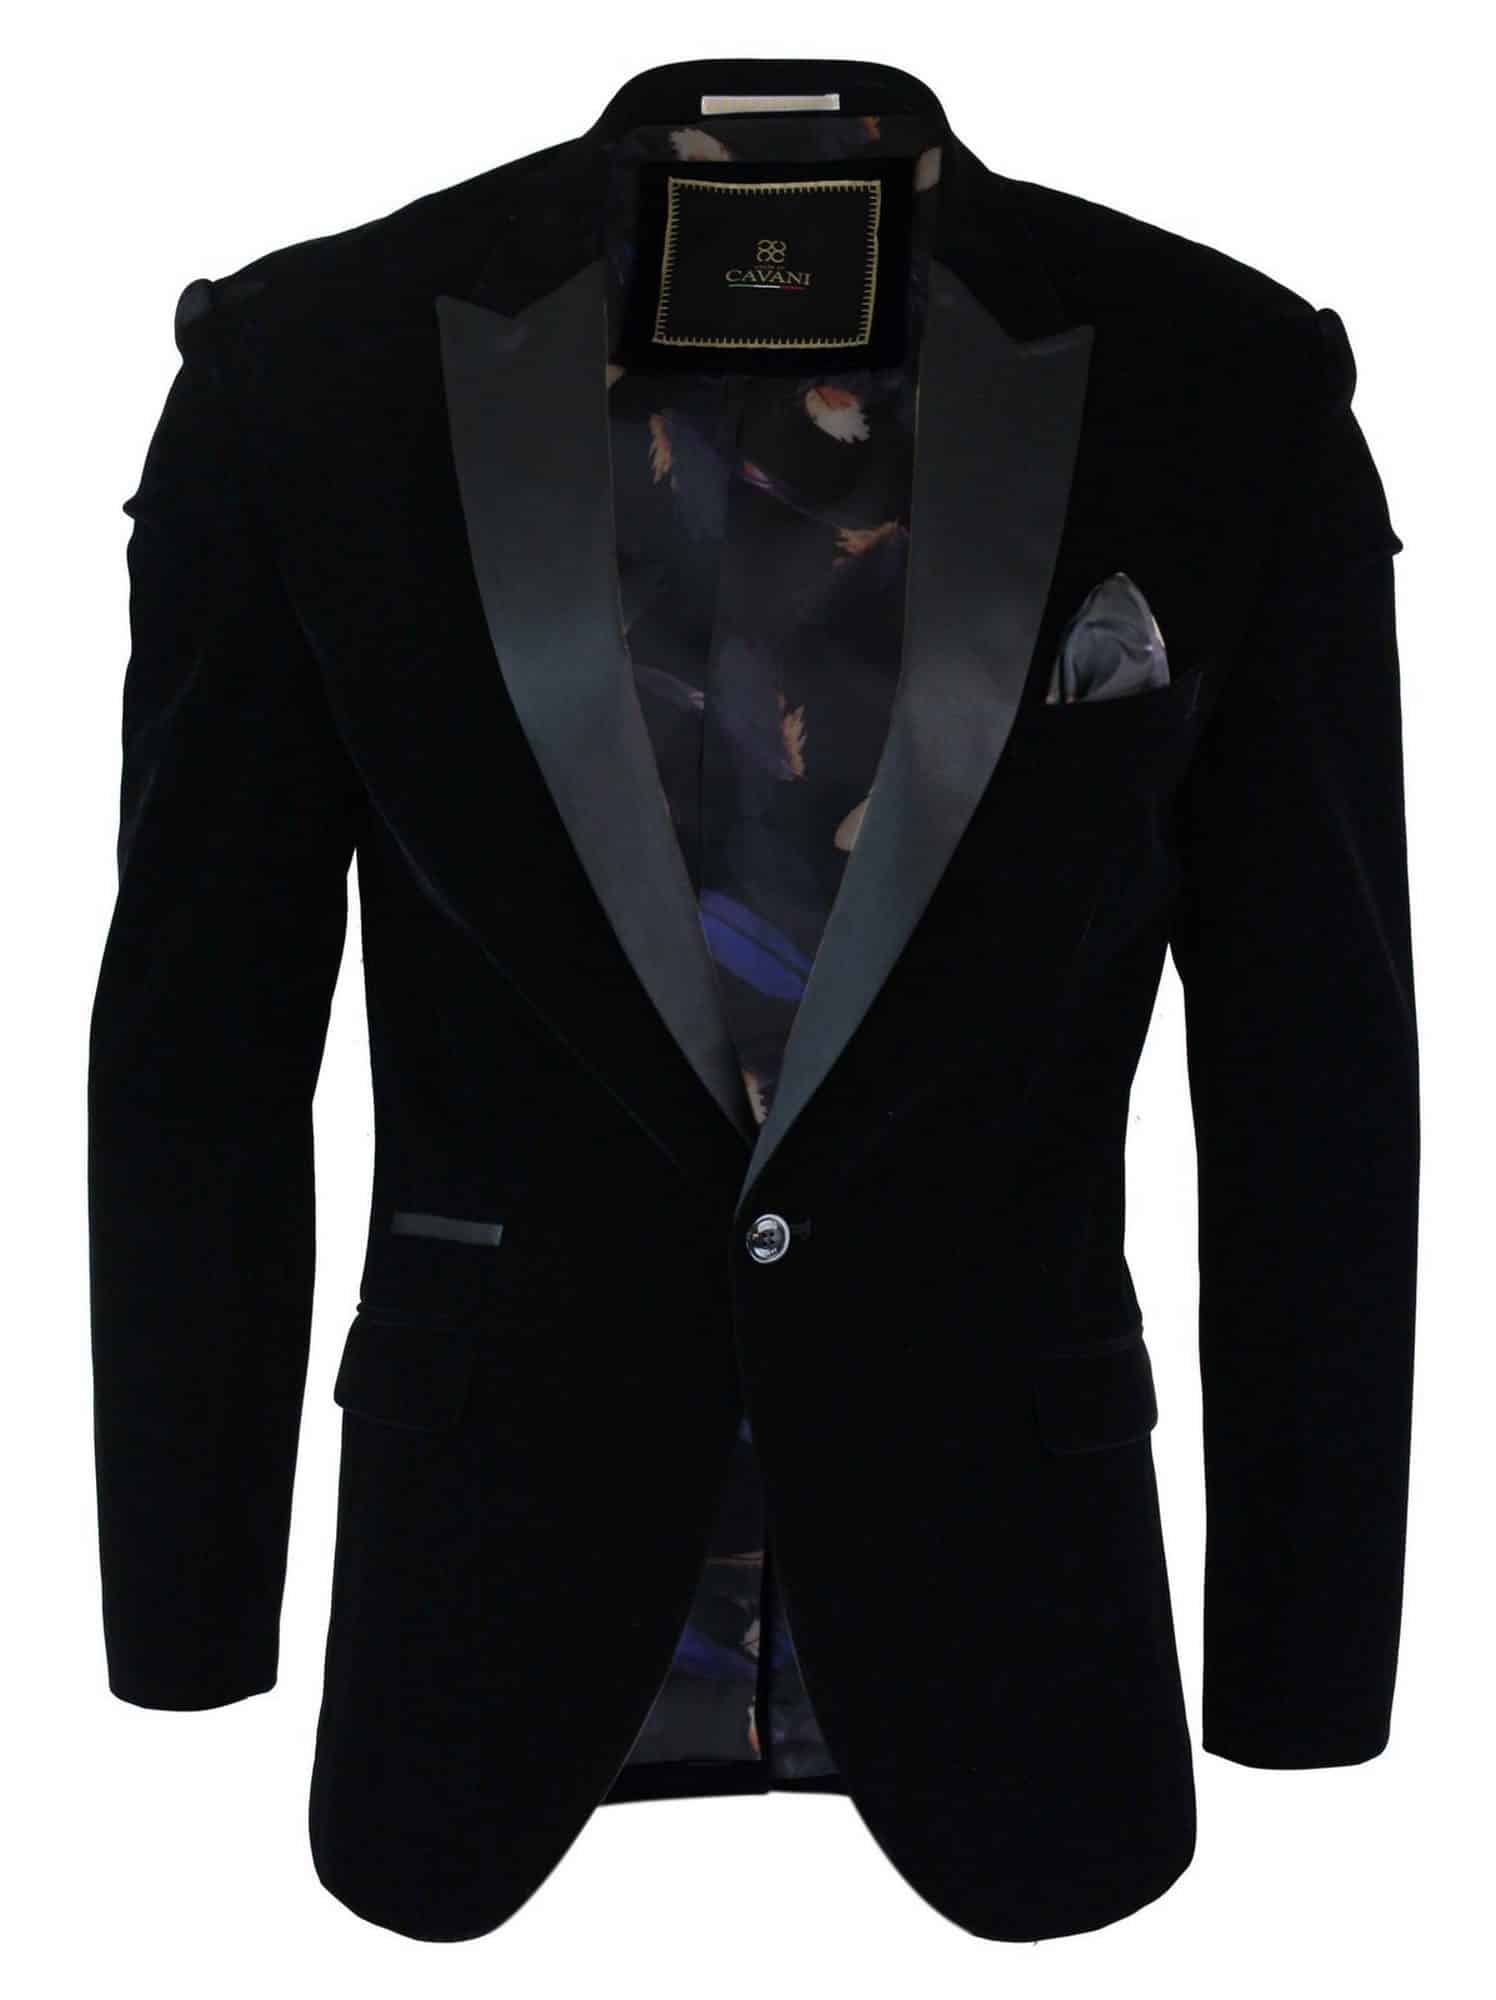 Rosa Black Blazer - House of Cavani - Mens Suit Jacket